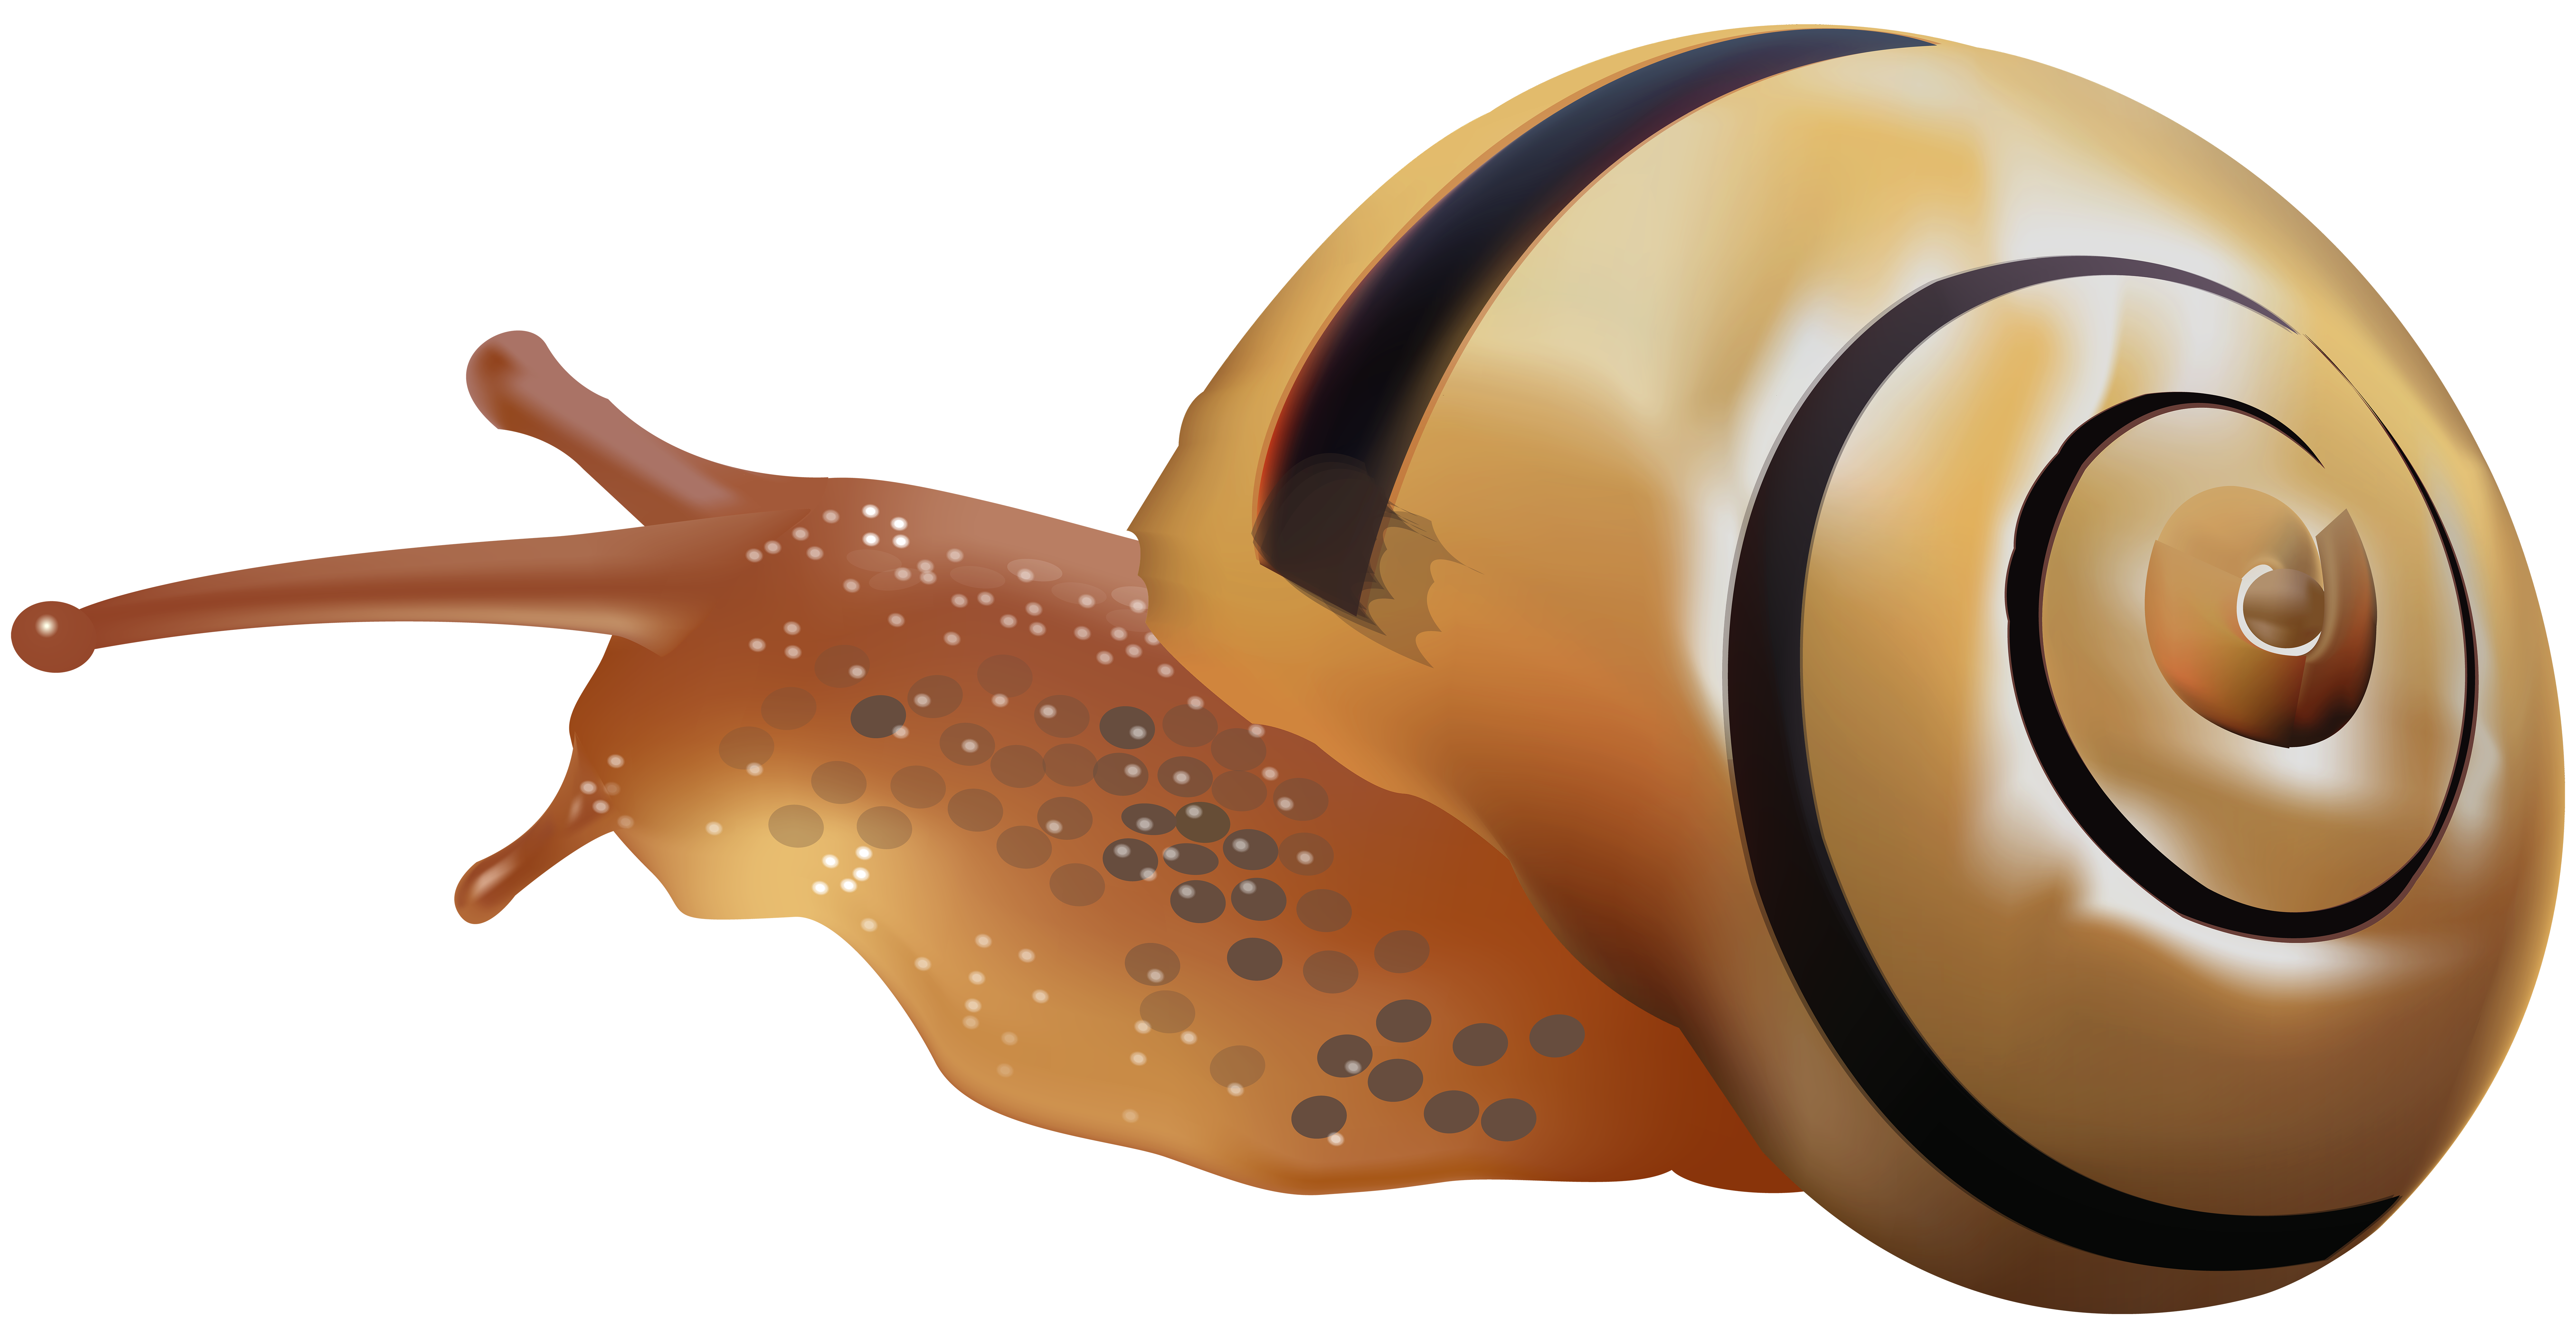 Sea snails frames illustrations. Clipart road wavy